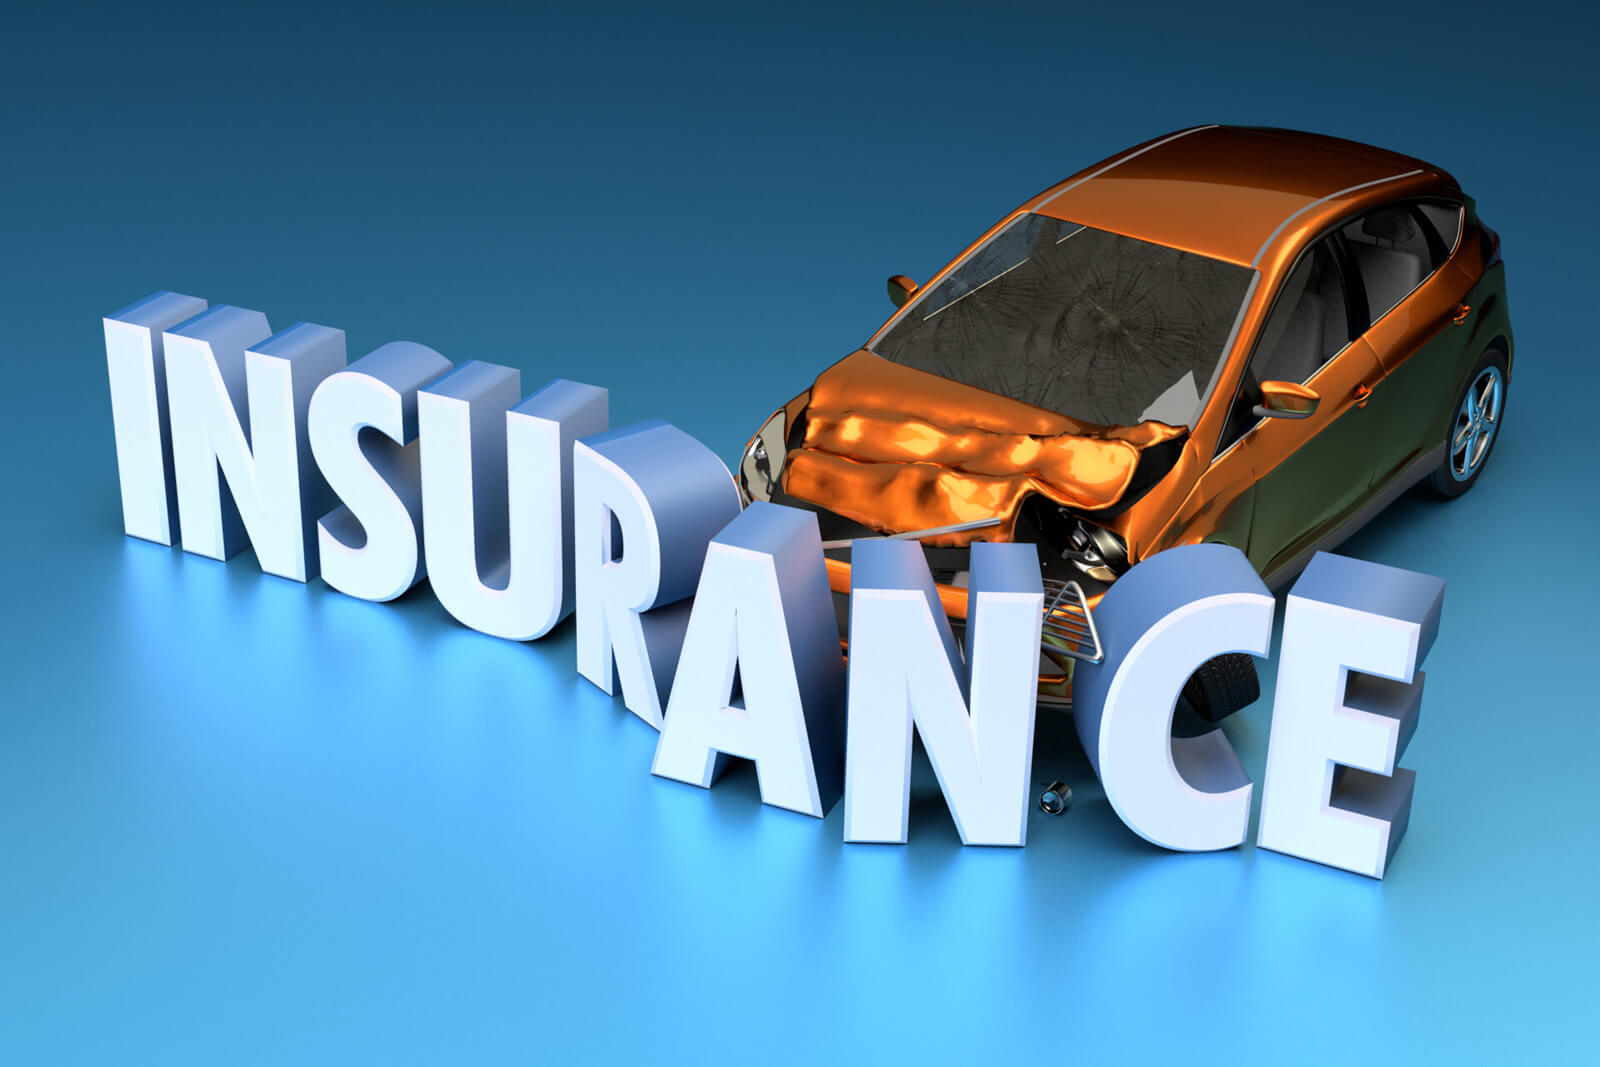 ebca car insurance concept image